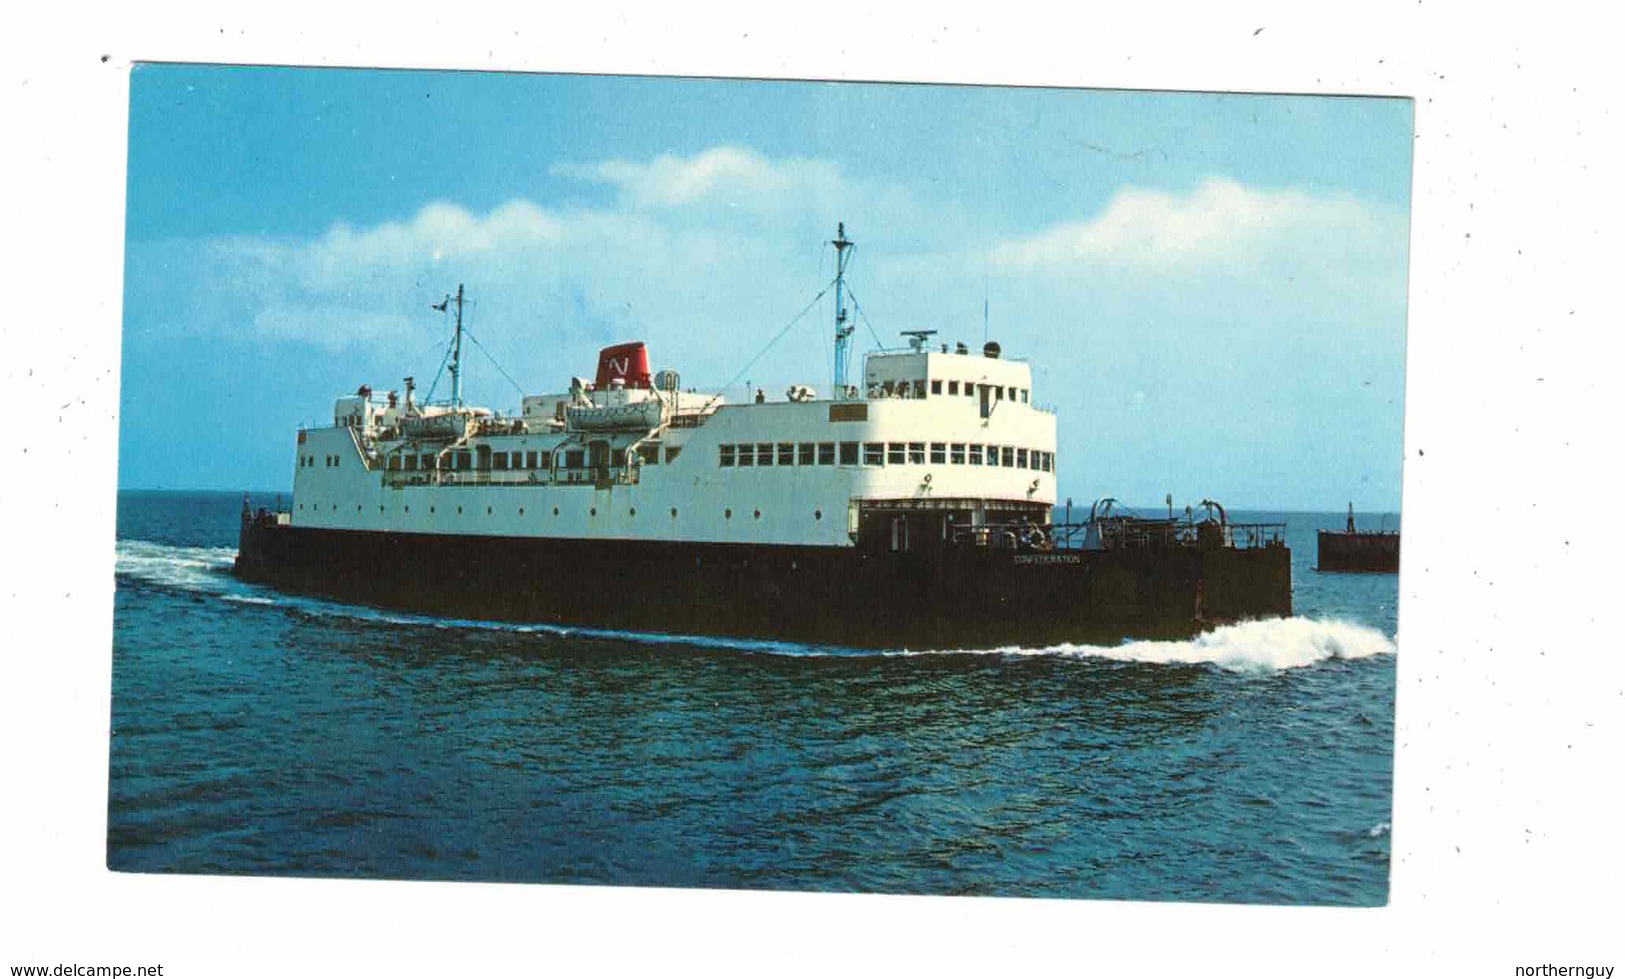 PORT BORDEN, Prince Edward Island, New Passenger & Car Ferry, "M V S CONFEDERATION", Old Chrome Postcard - Andere & Zonder Classificatie